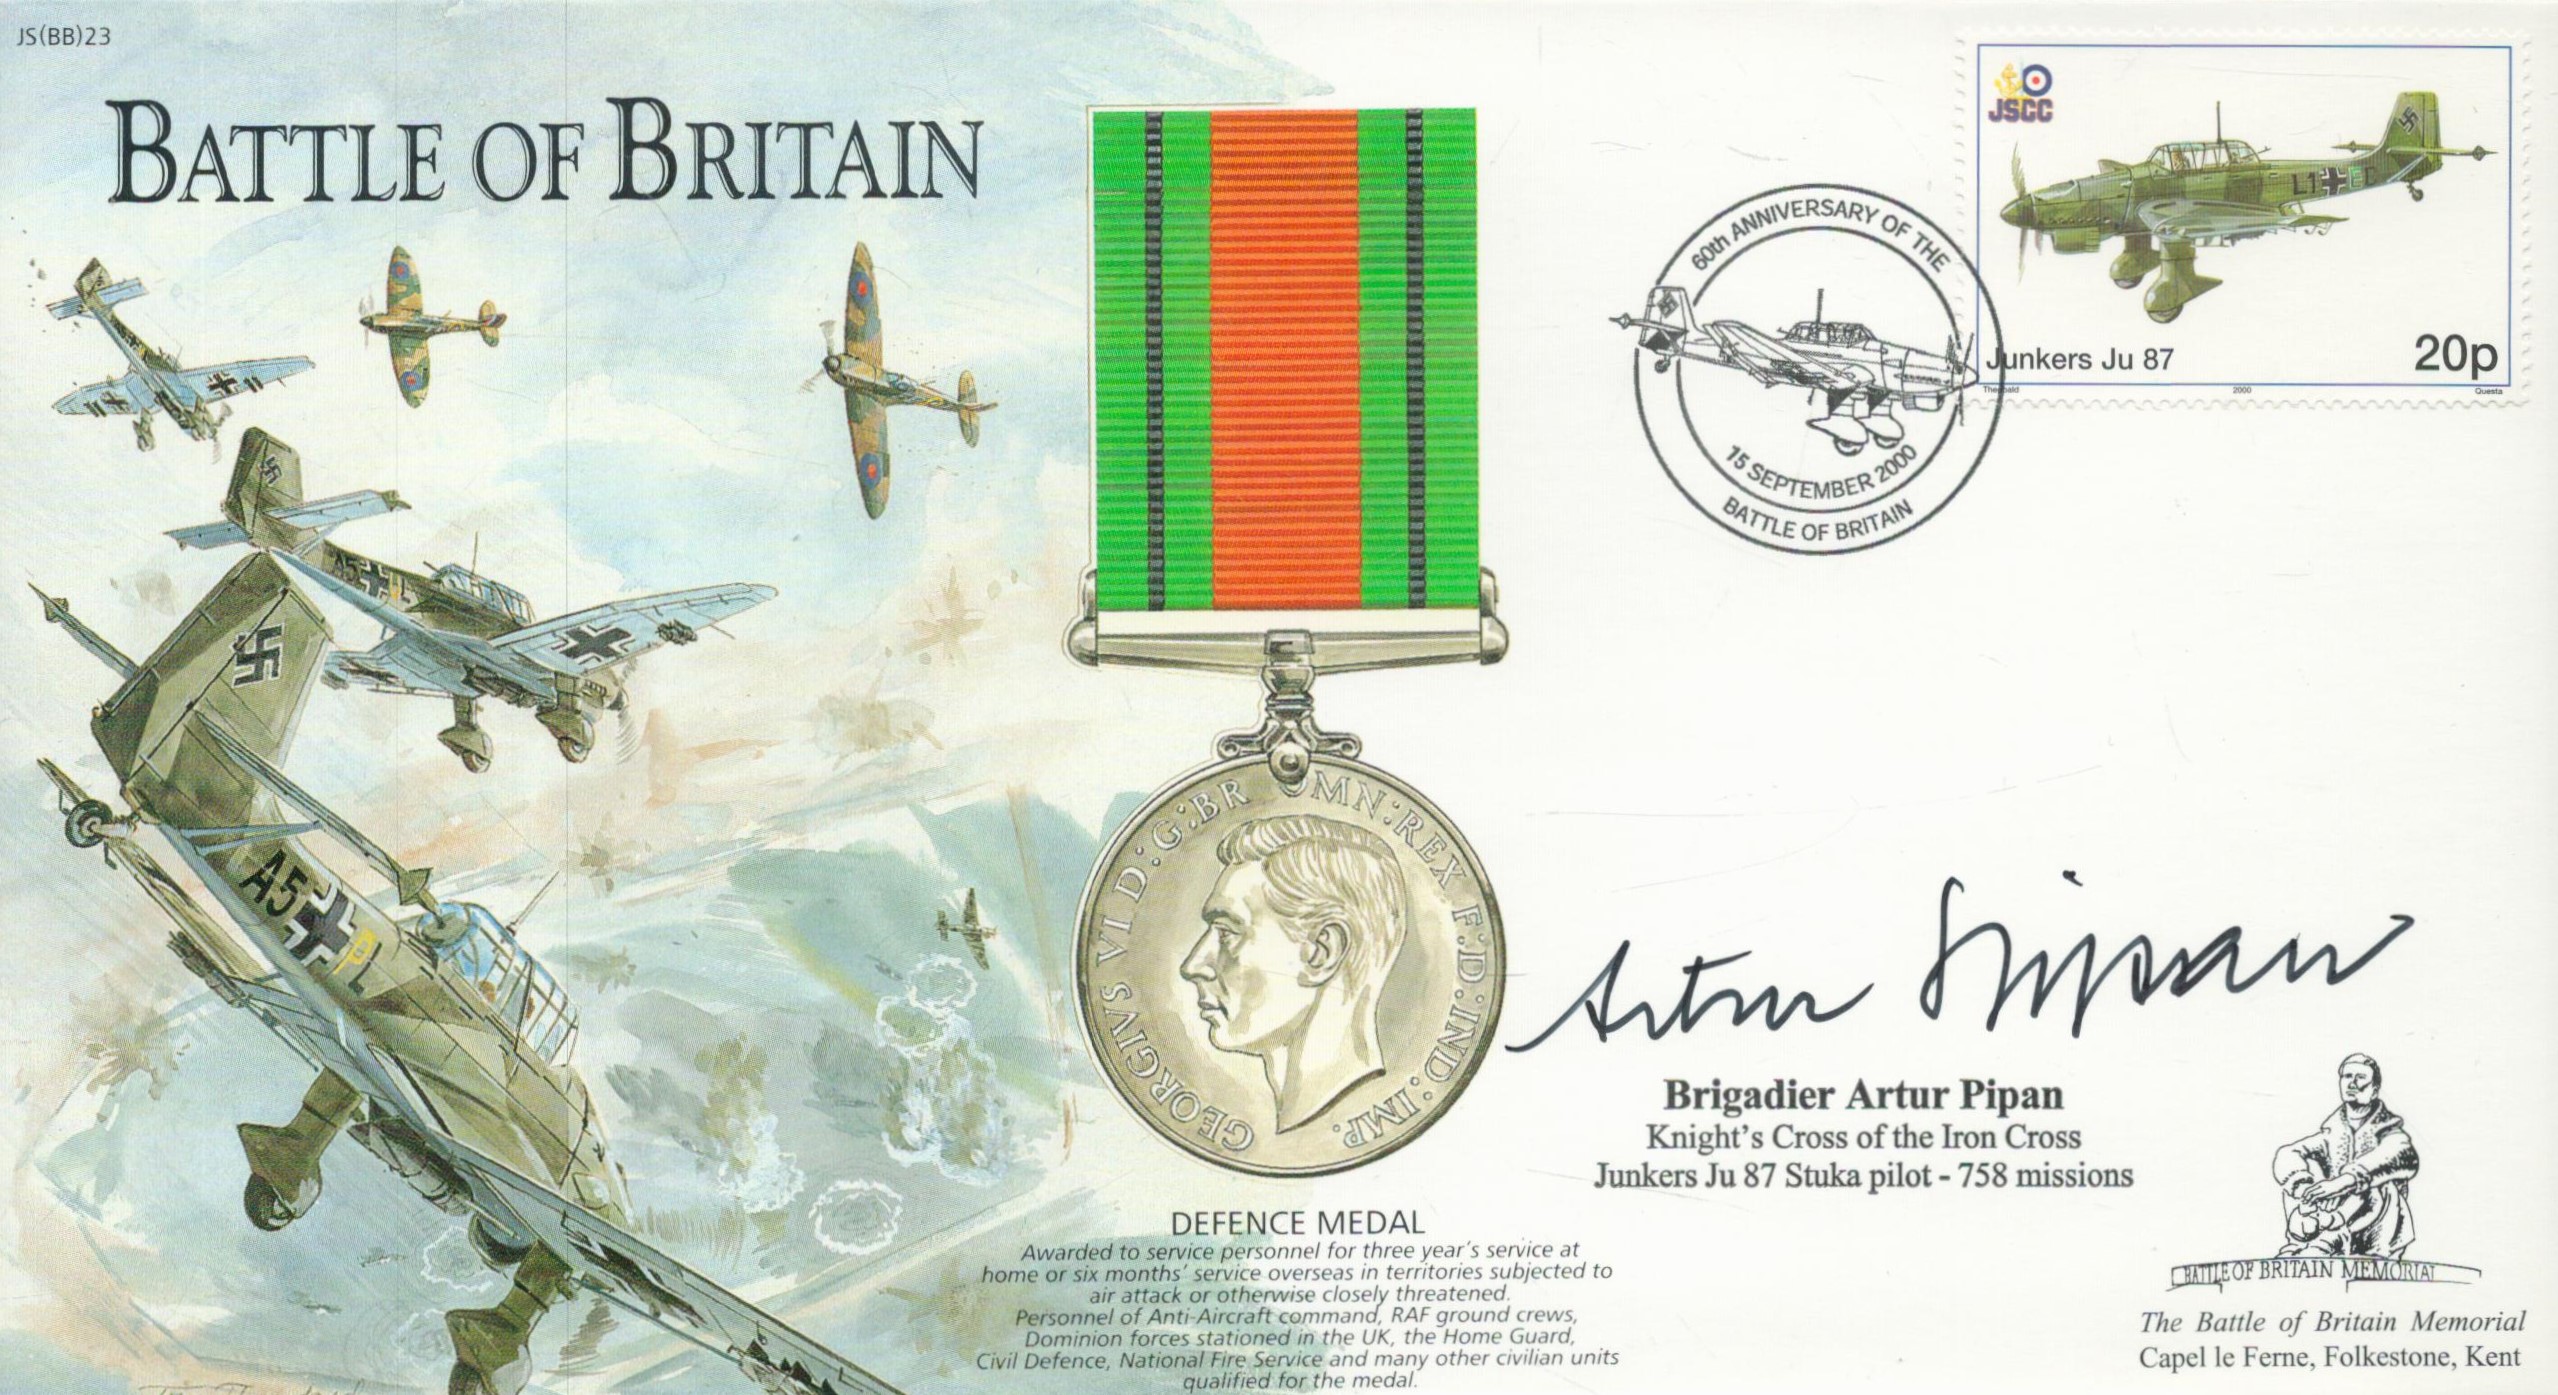 WW2 Luftwaffe fighter ace Brig Artur Pipan KC signed 2000 Battle of Britain cover. Stuka pilot 758